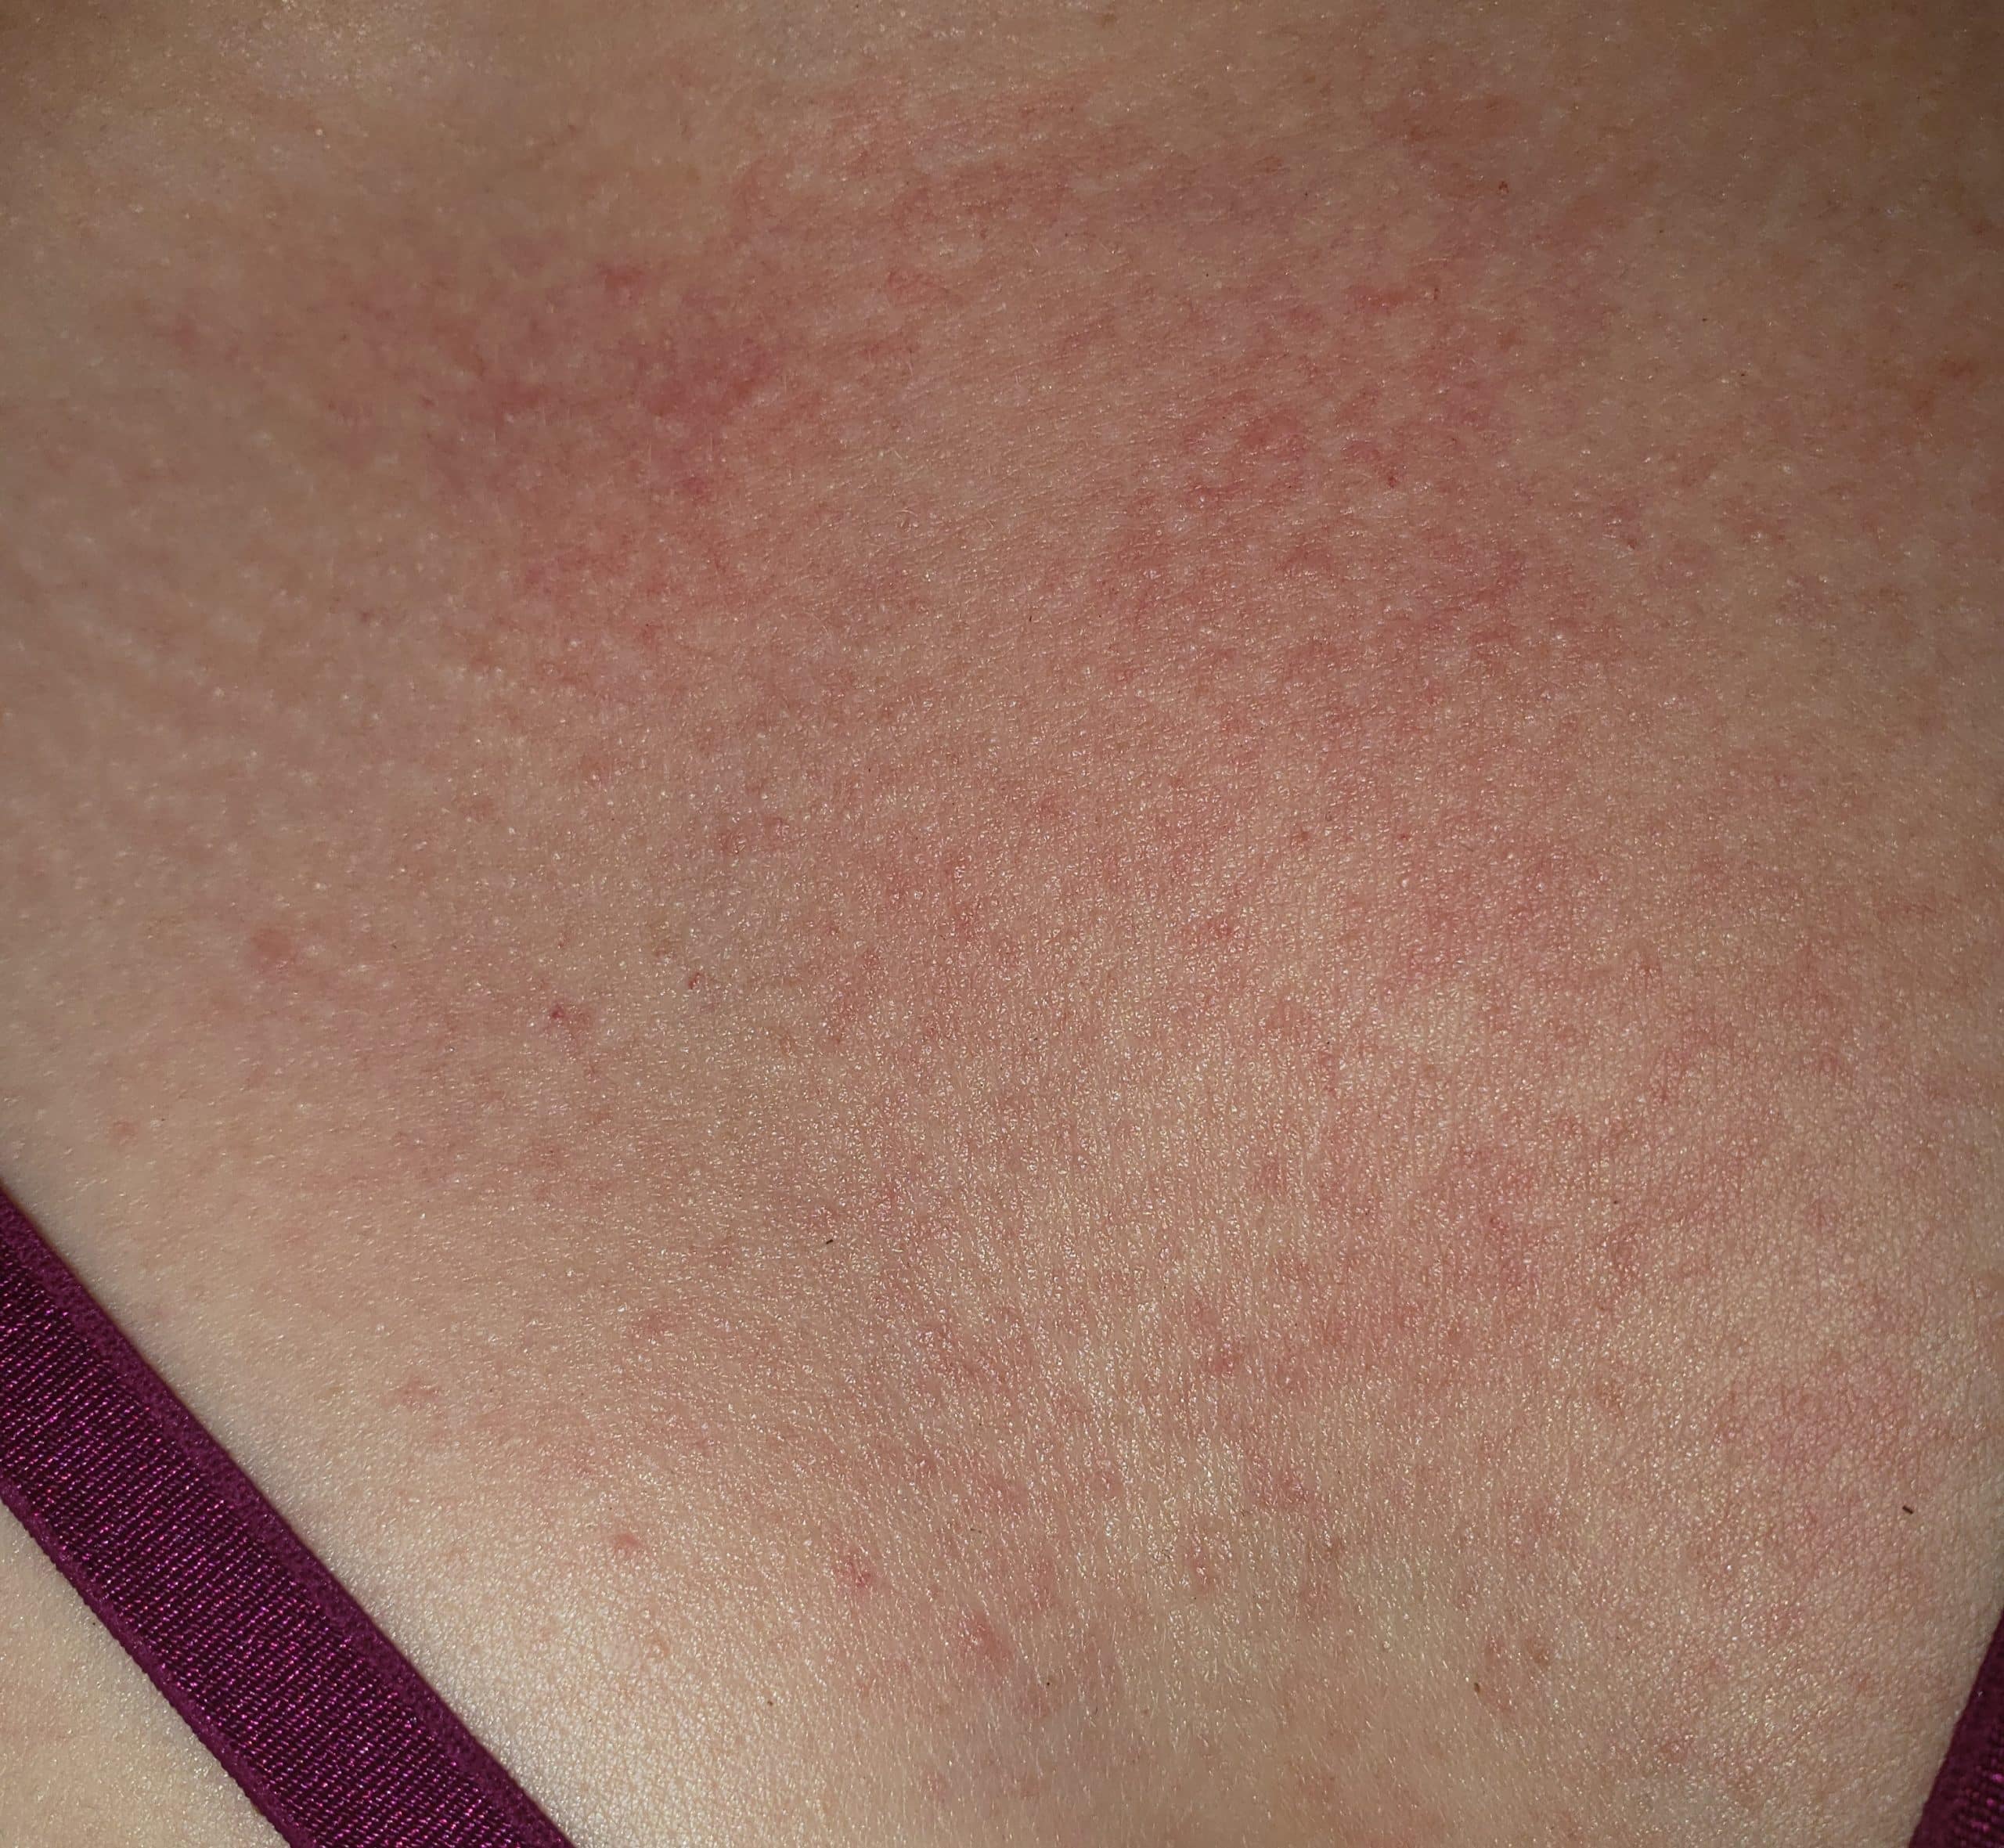 PMLE Sun Allergy Rash Pictures